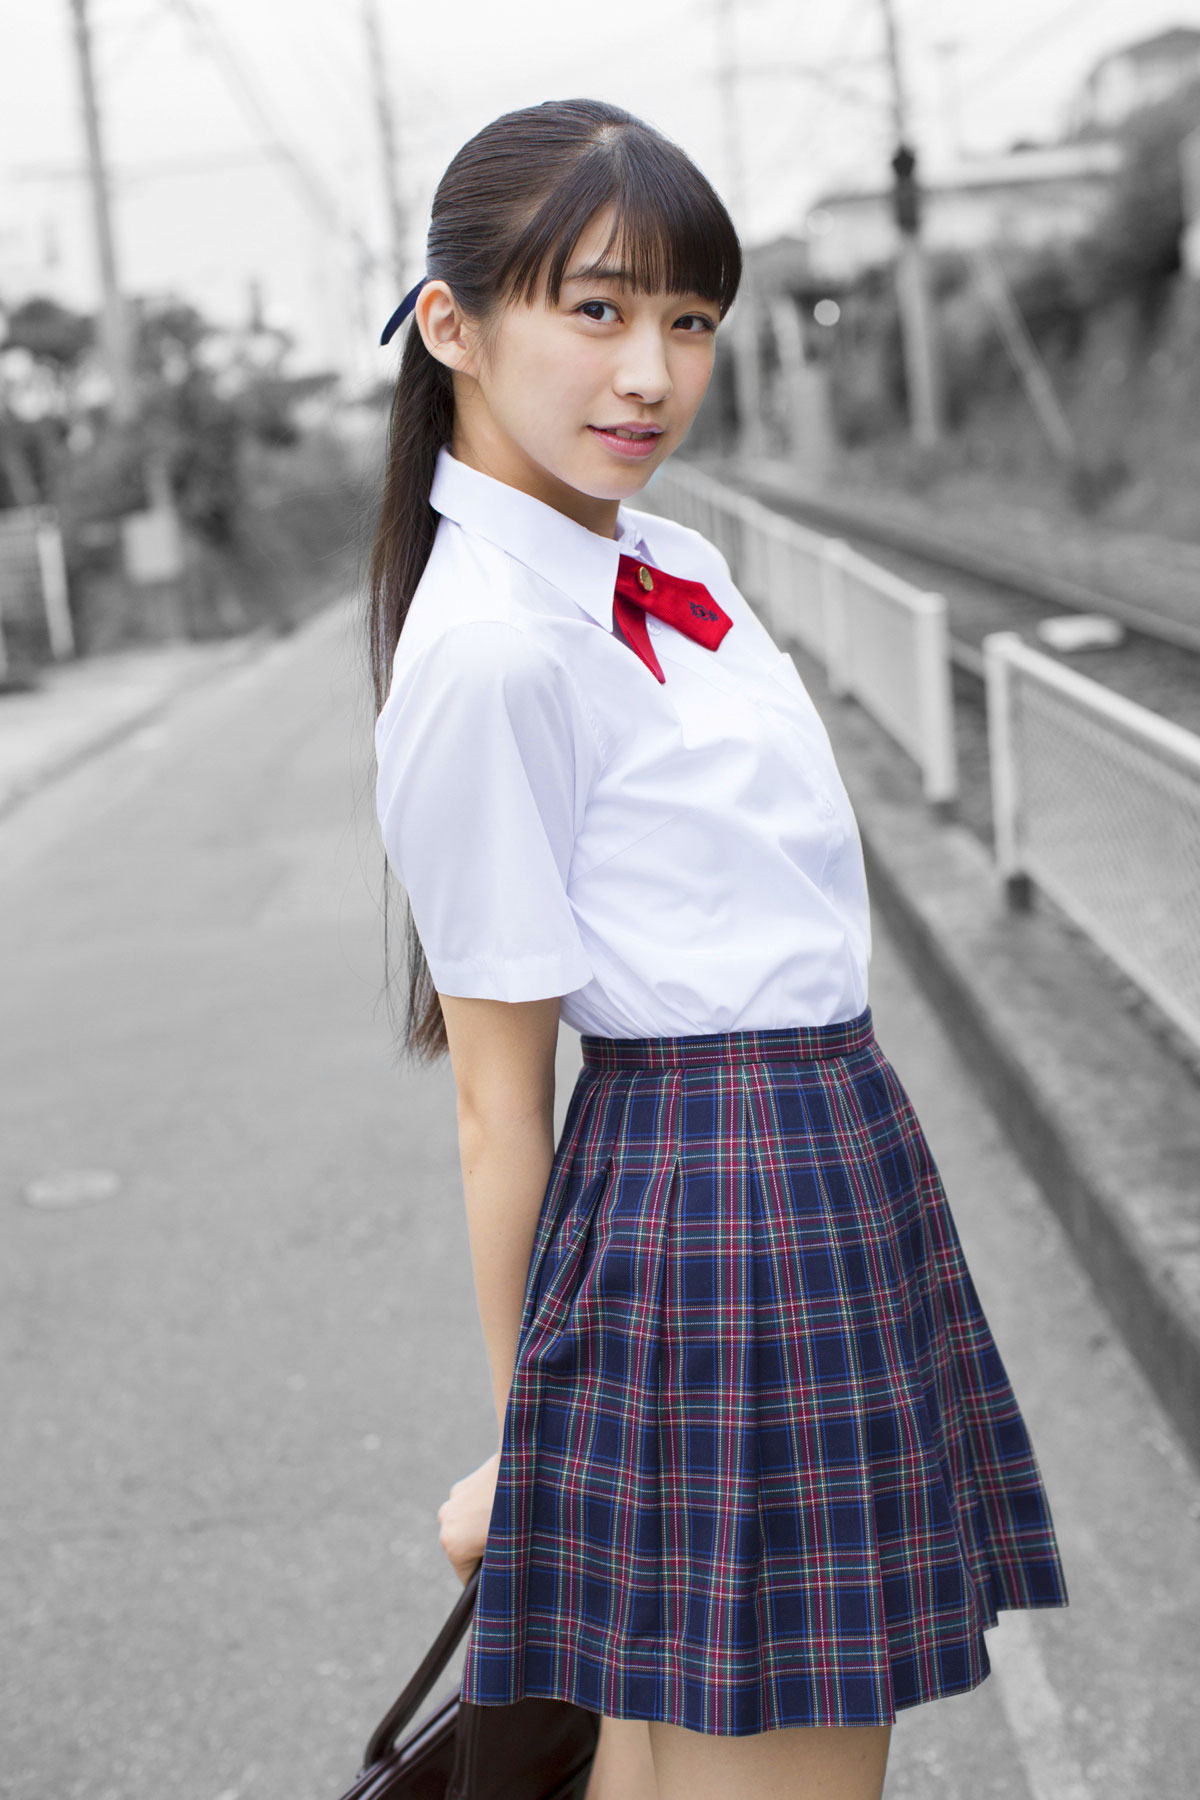 Petite japanese schoolgirl